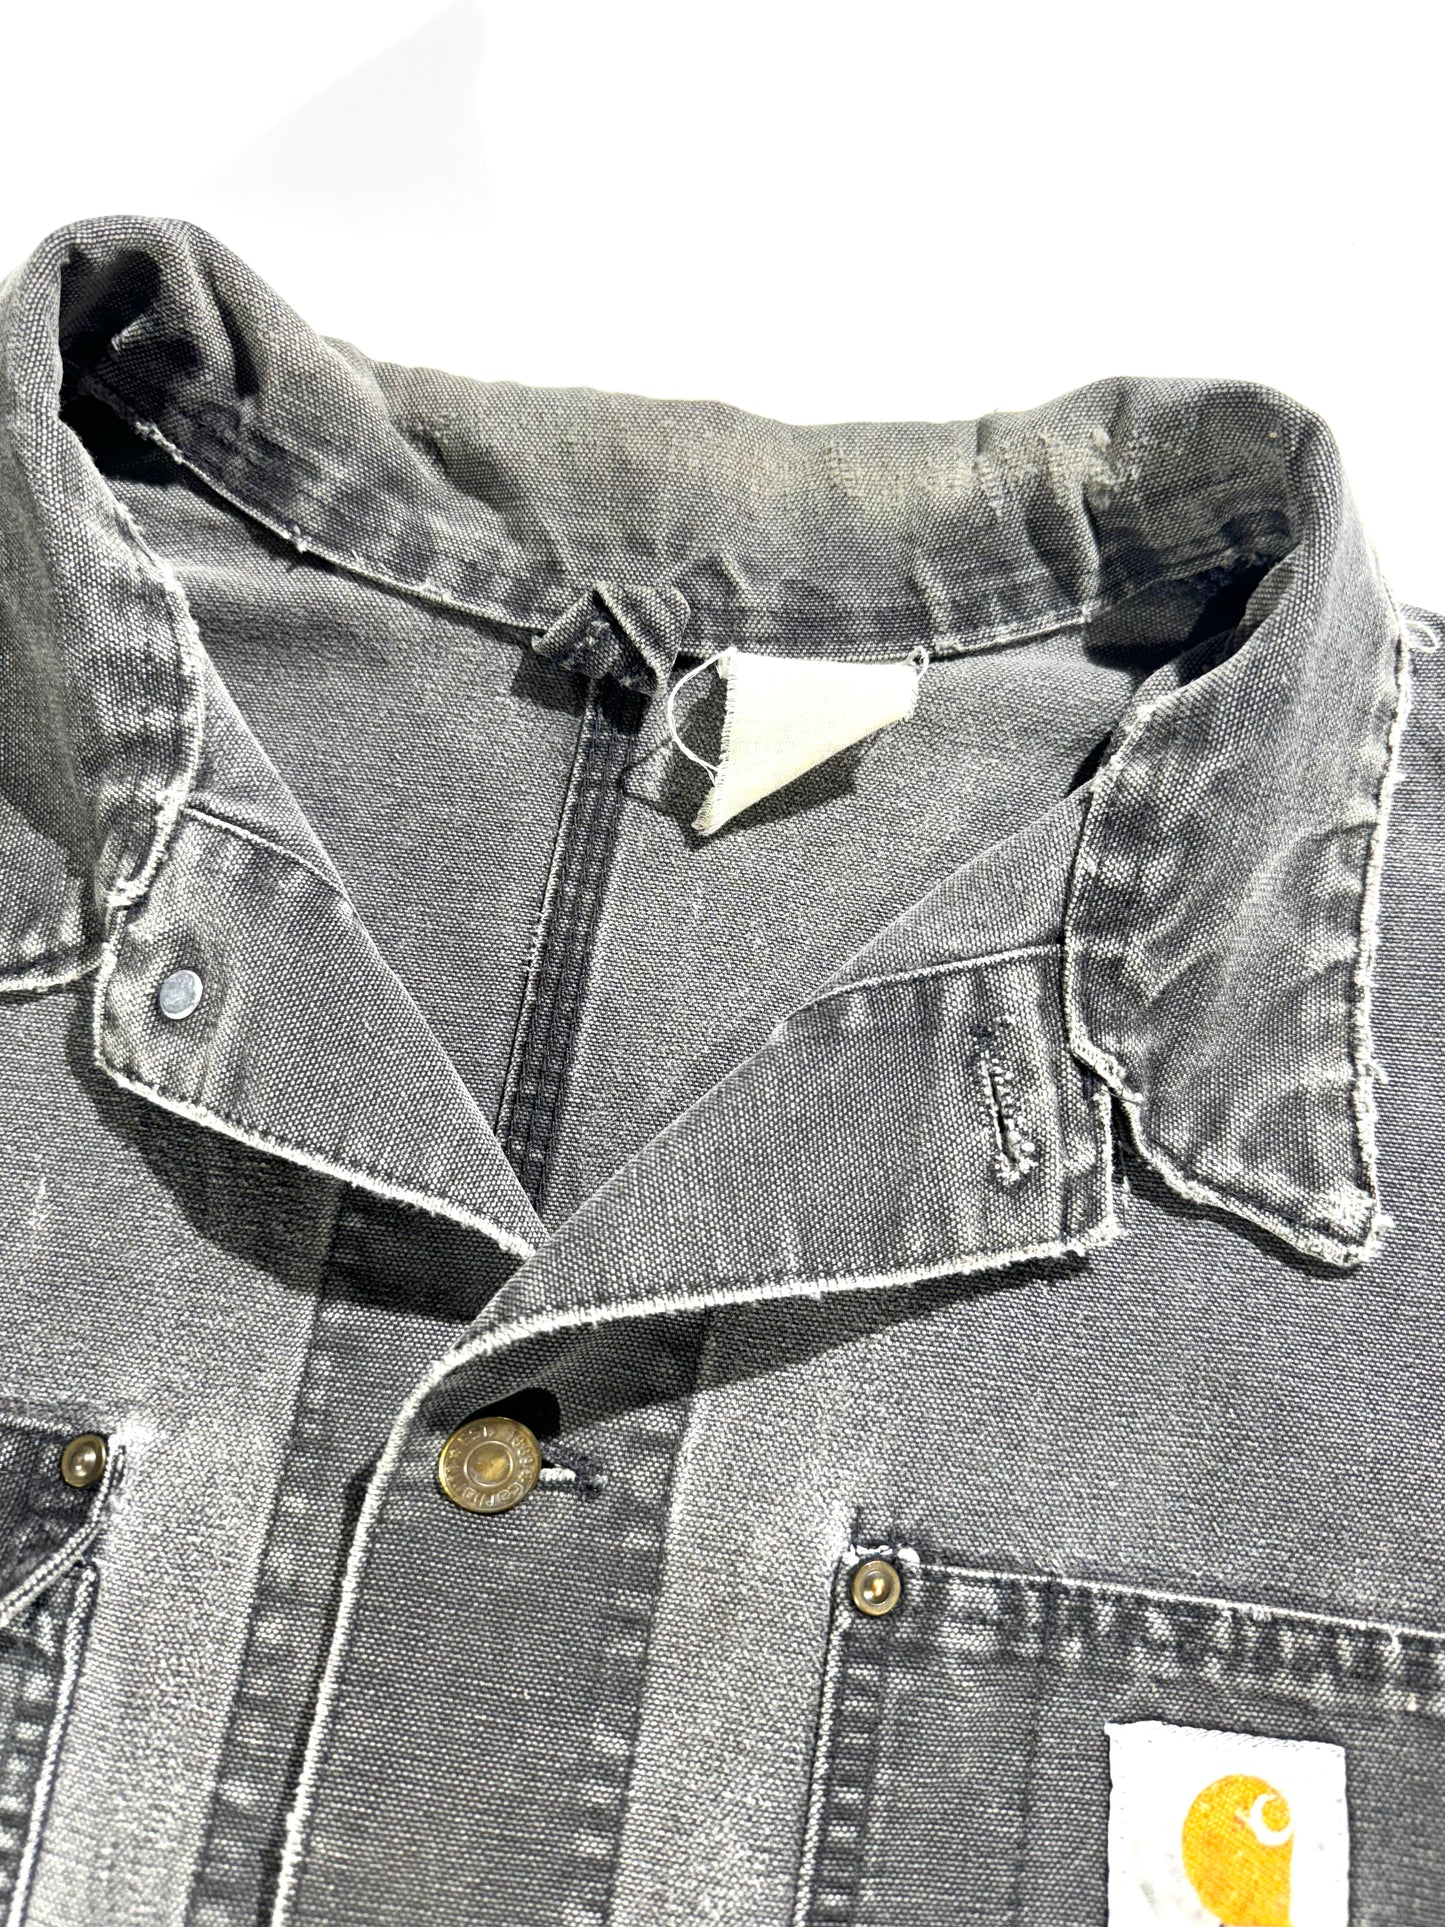 Vintage Carhartt Vest Jacket Cut Off Faded Black